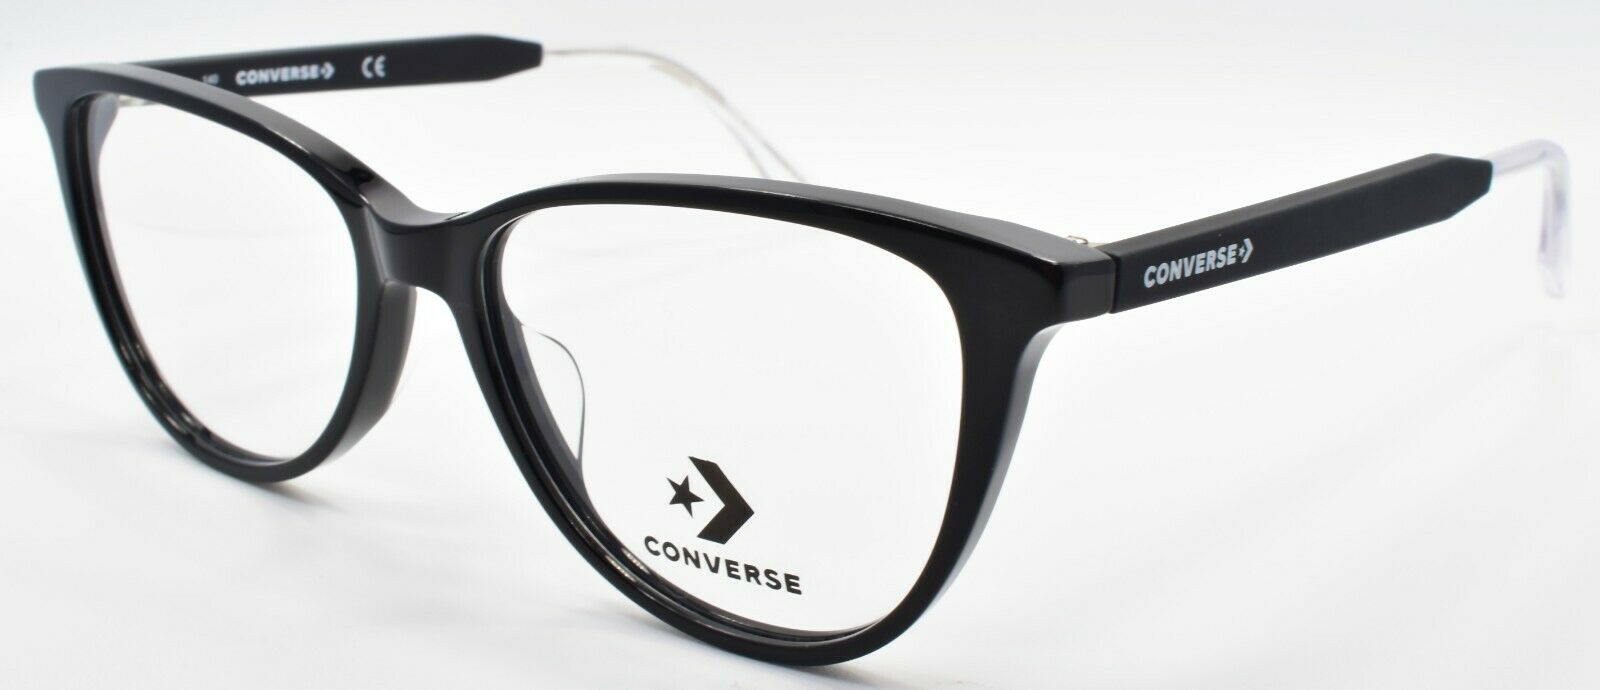 1-CONVERSE CV5004 001 Women's Eyeglasses Frames Cat Eye 52-15-140 Black-886895506571-IKSpecs